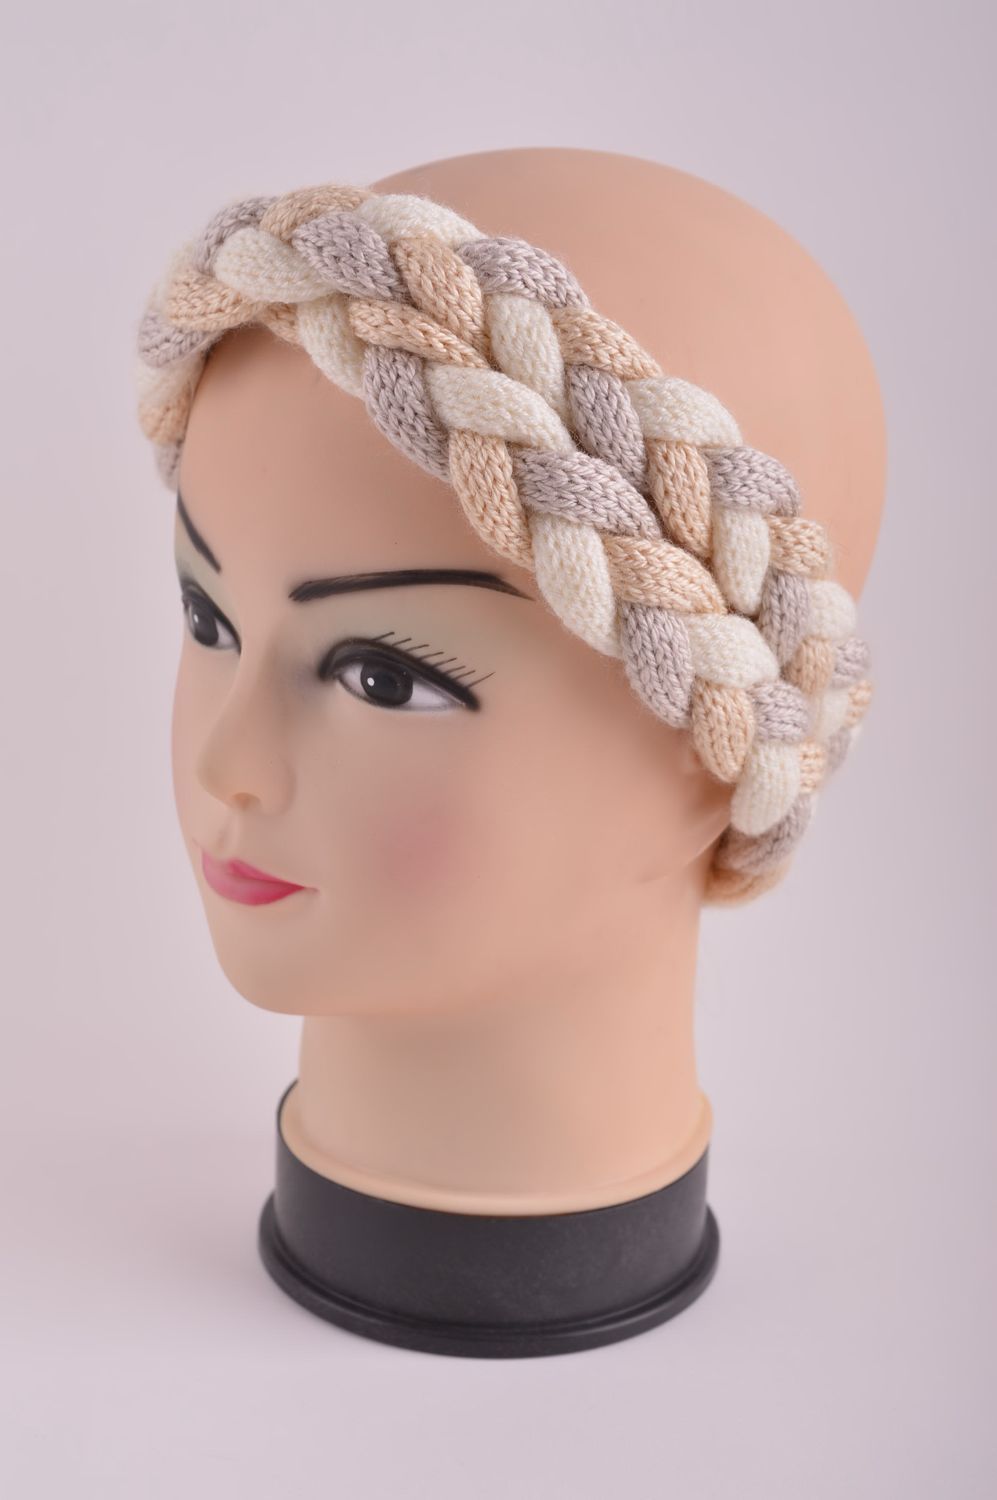 Handmade light designer headband winter warm headband stylish accessory photo 2